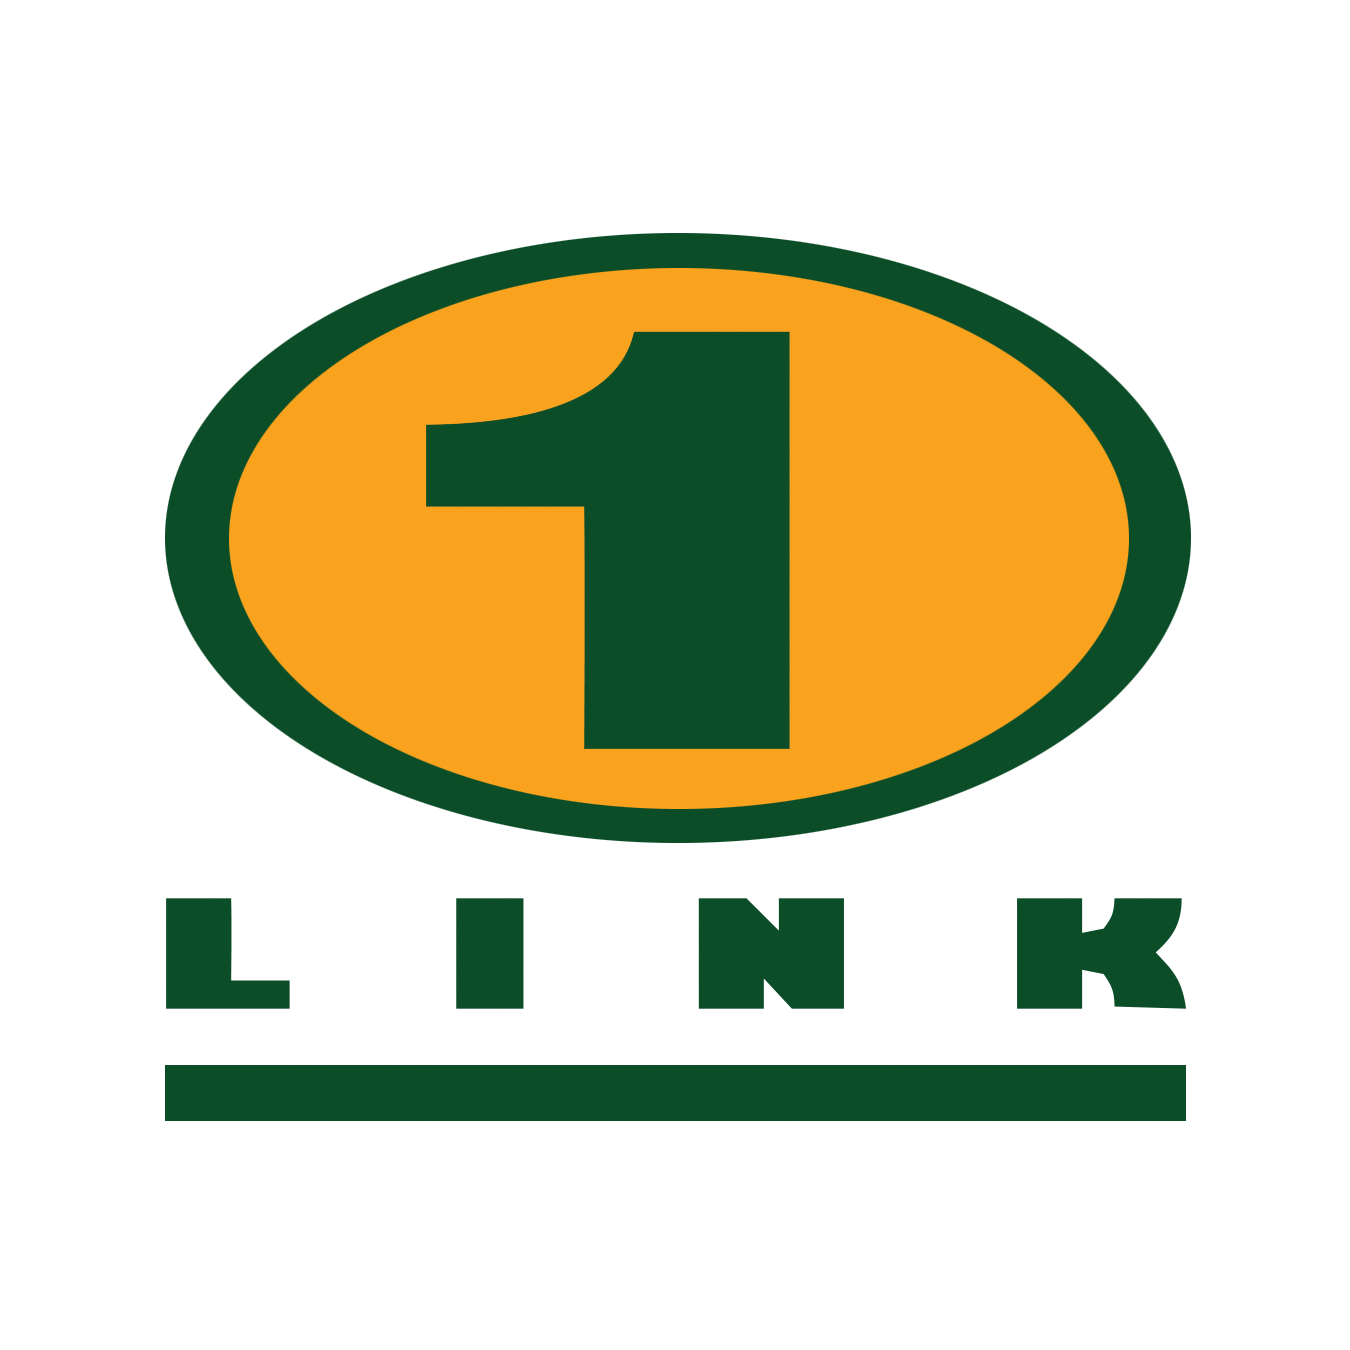 1Link